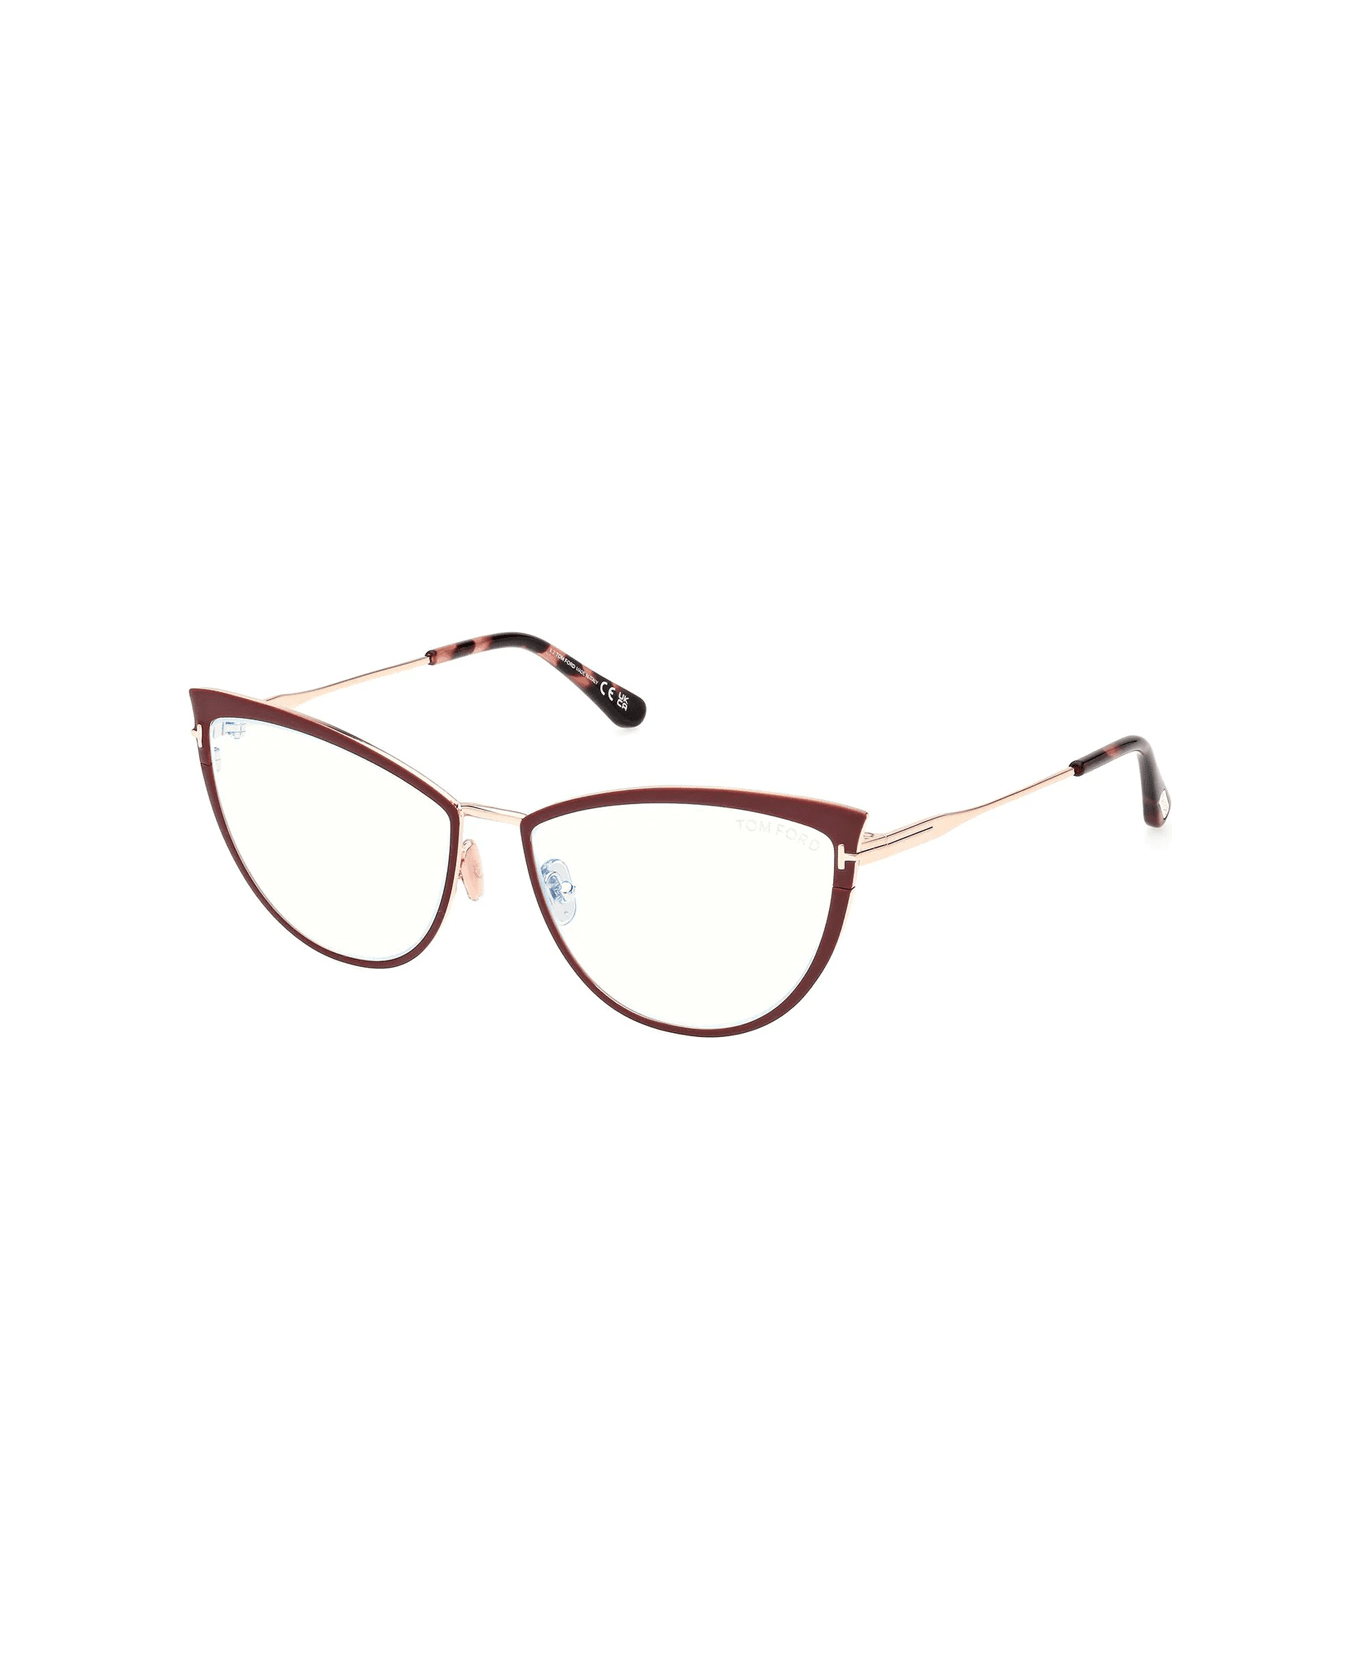 Tom Ford Eyewear Ft5877 069 Glasses - Rosso